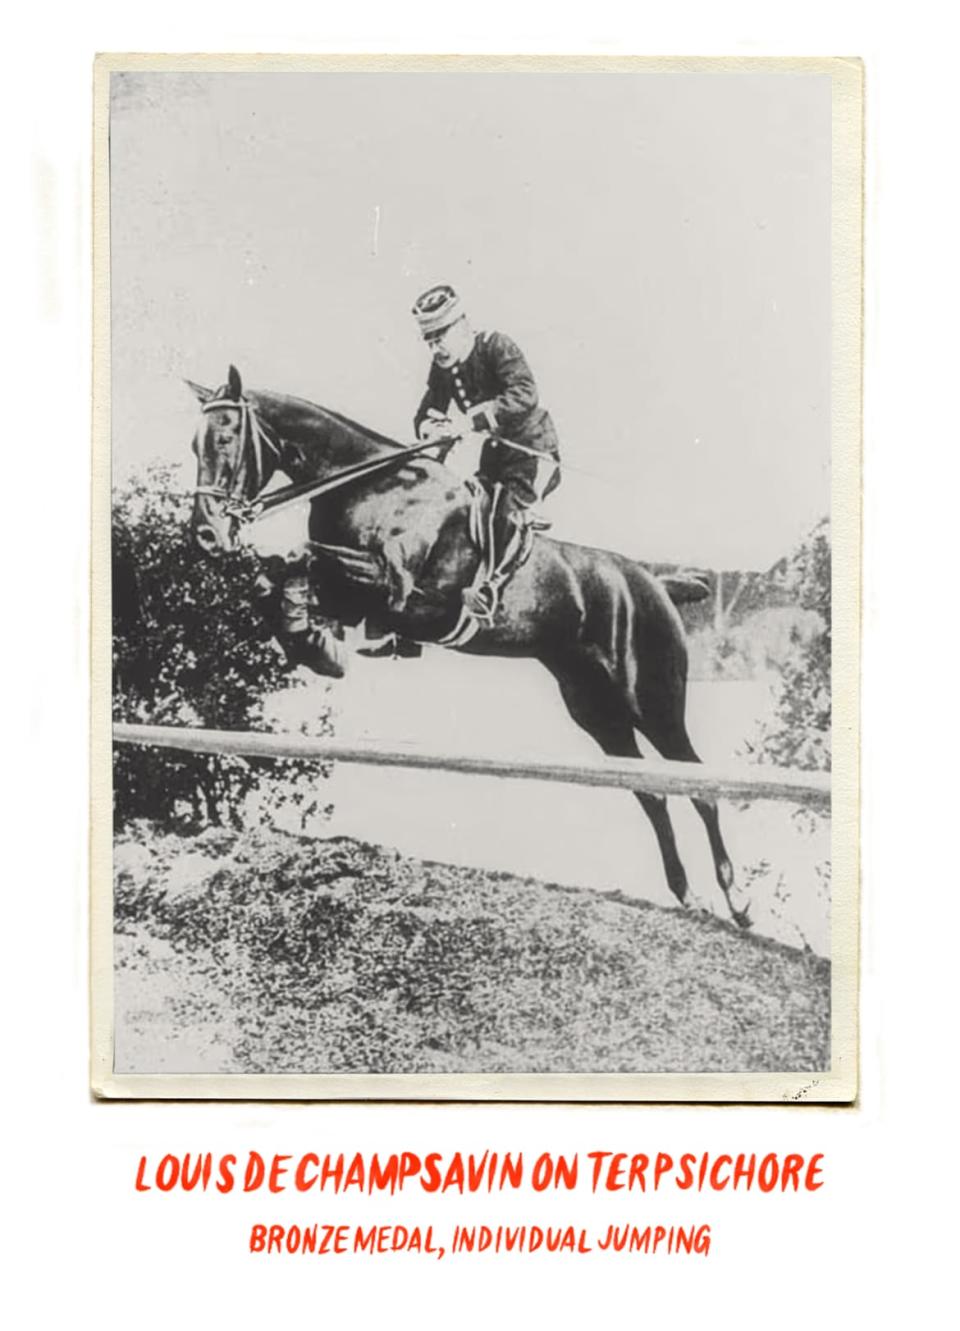 Horse jumping at the 1900 Paris Olympics